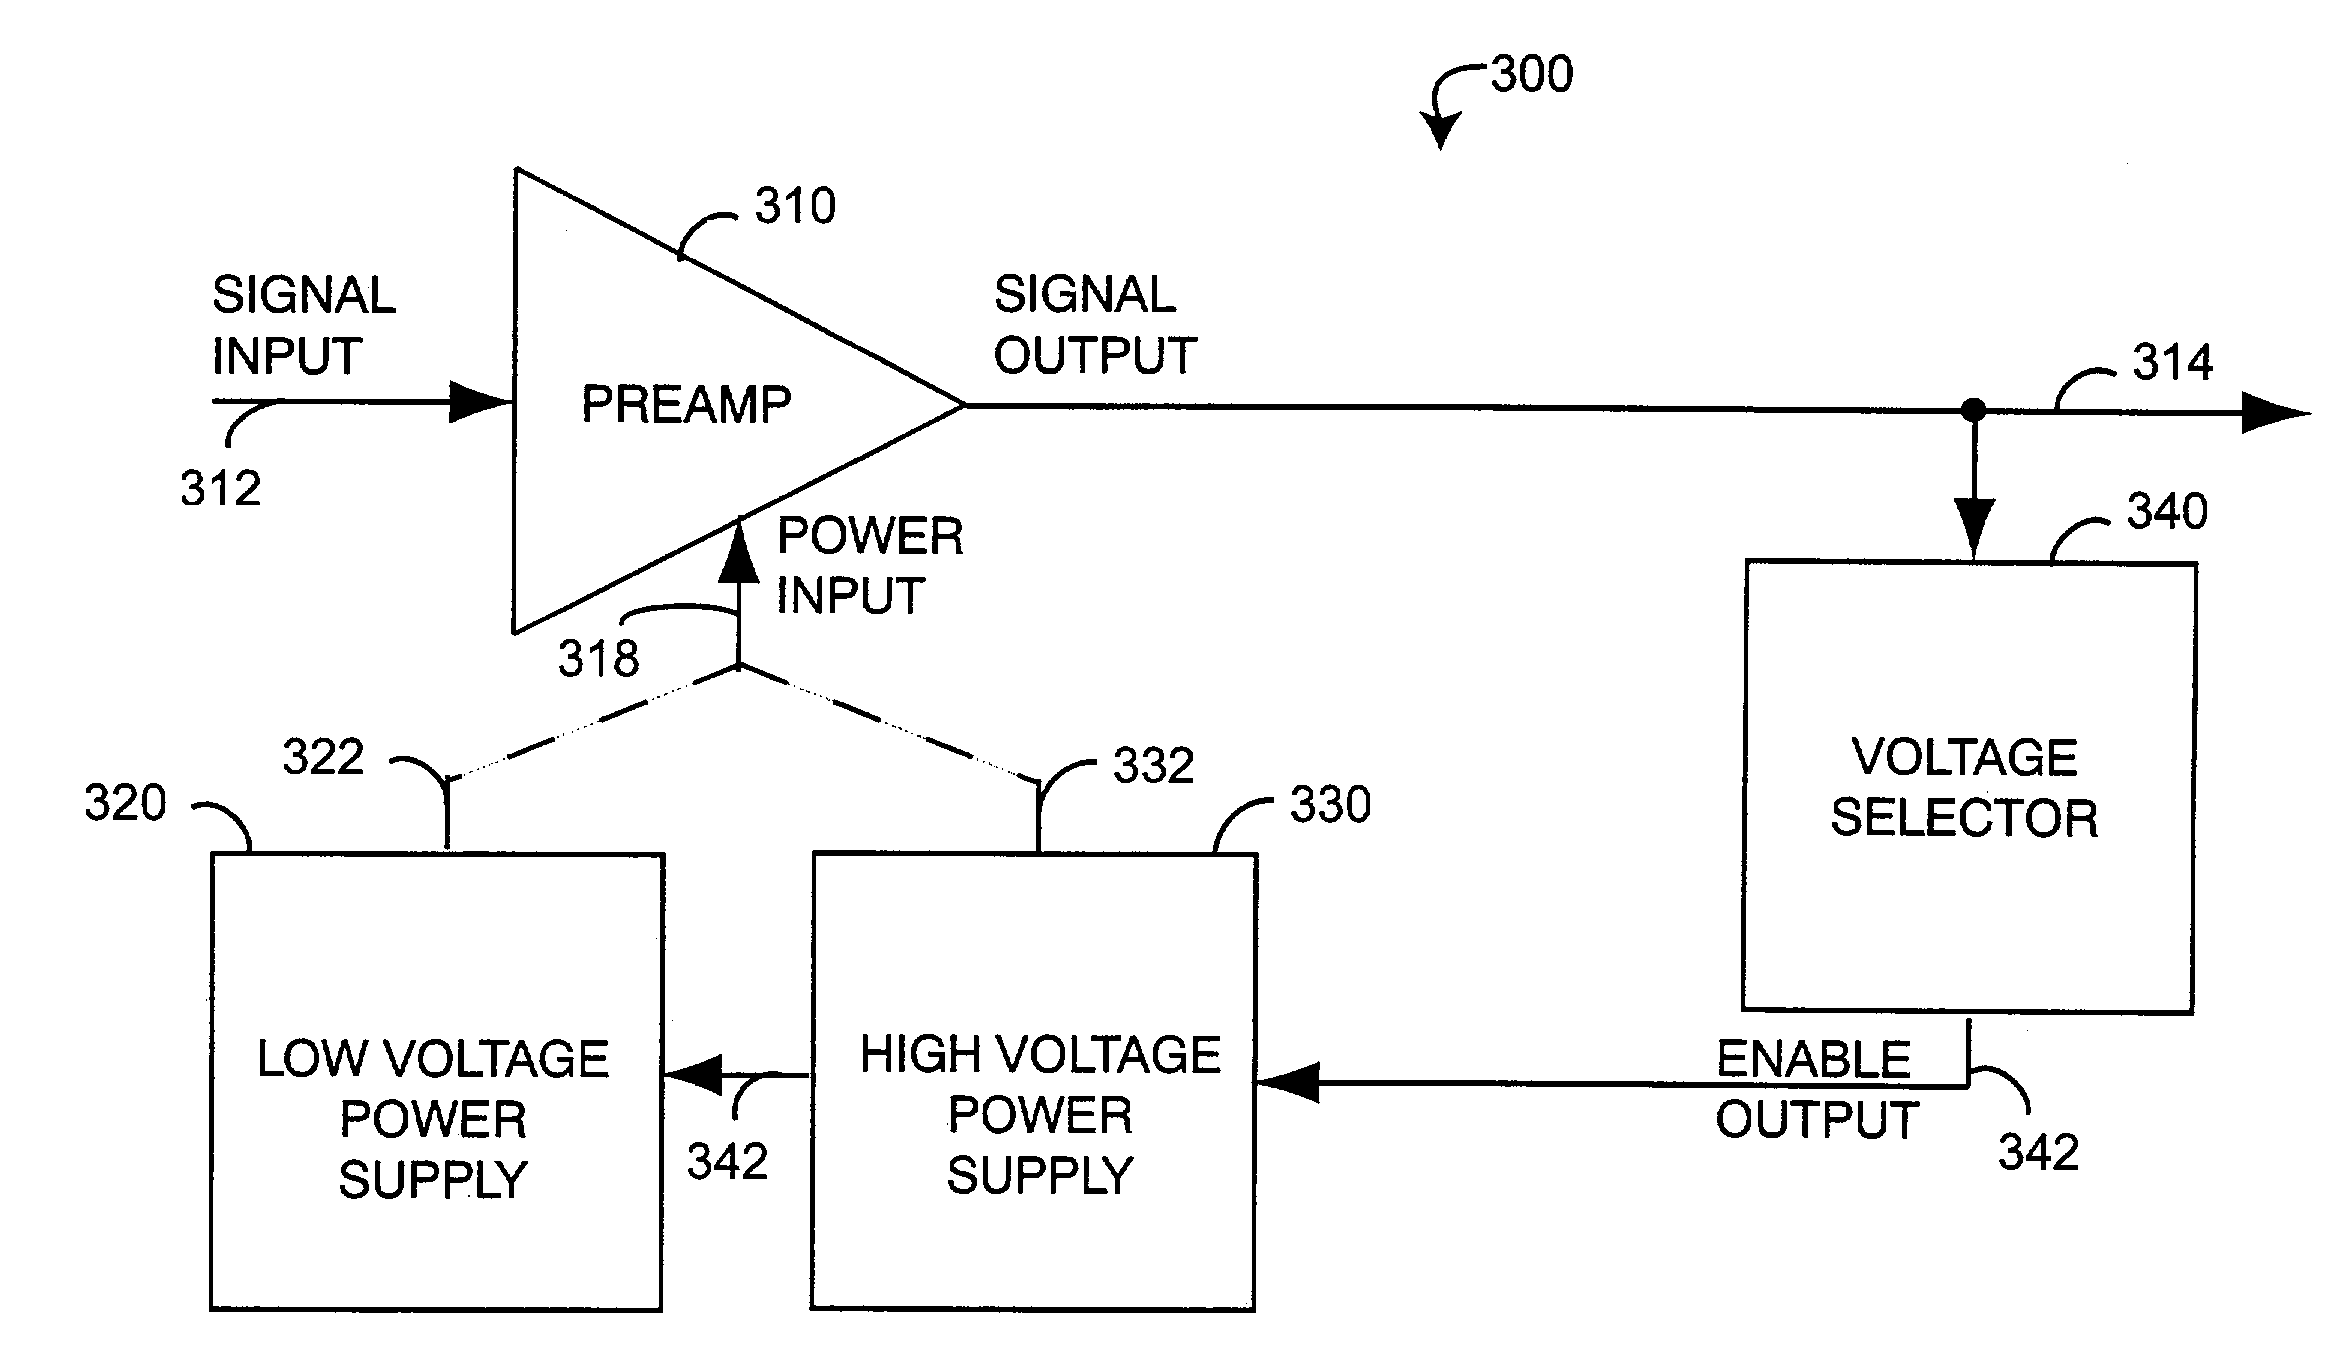 Power supply rail controller